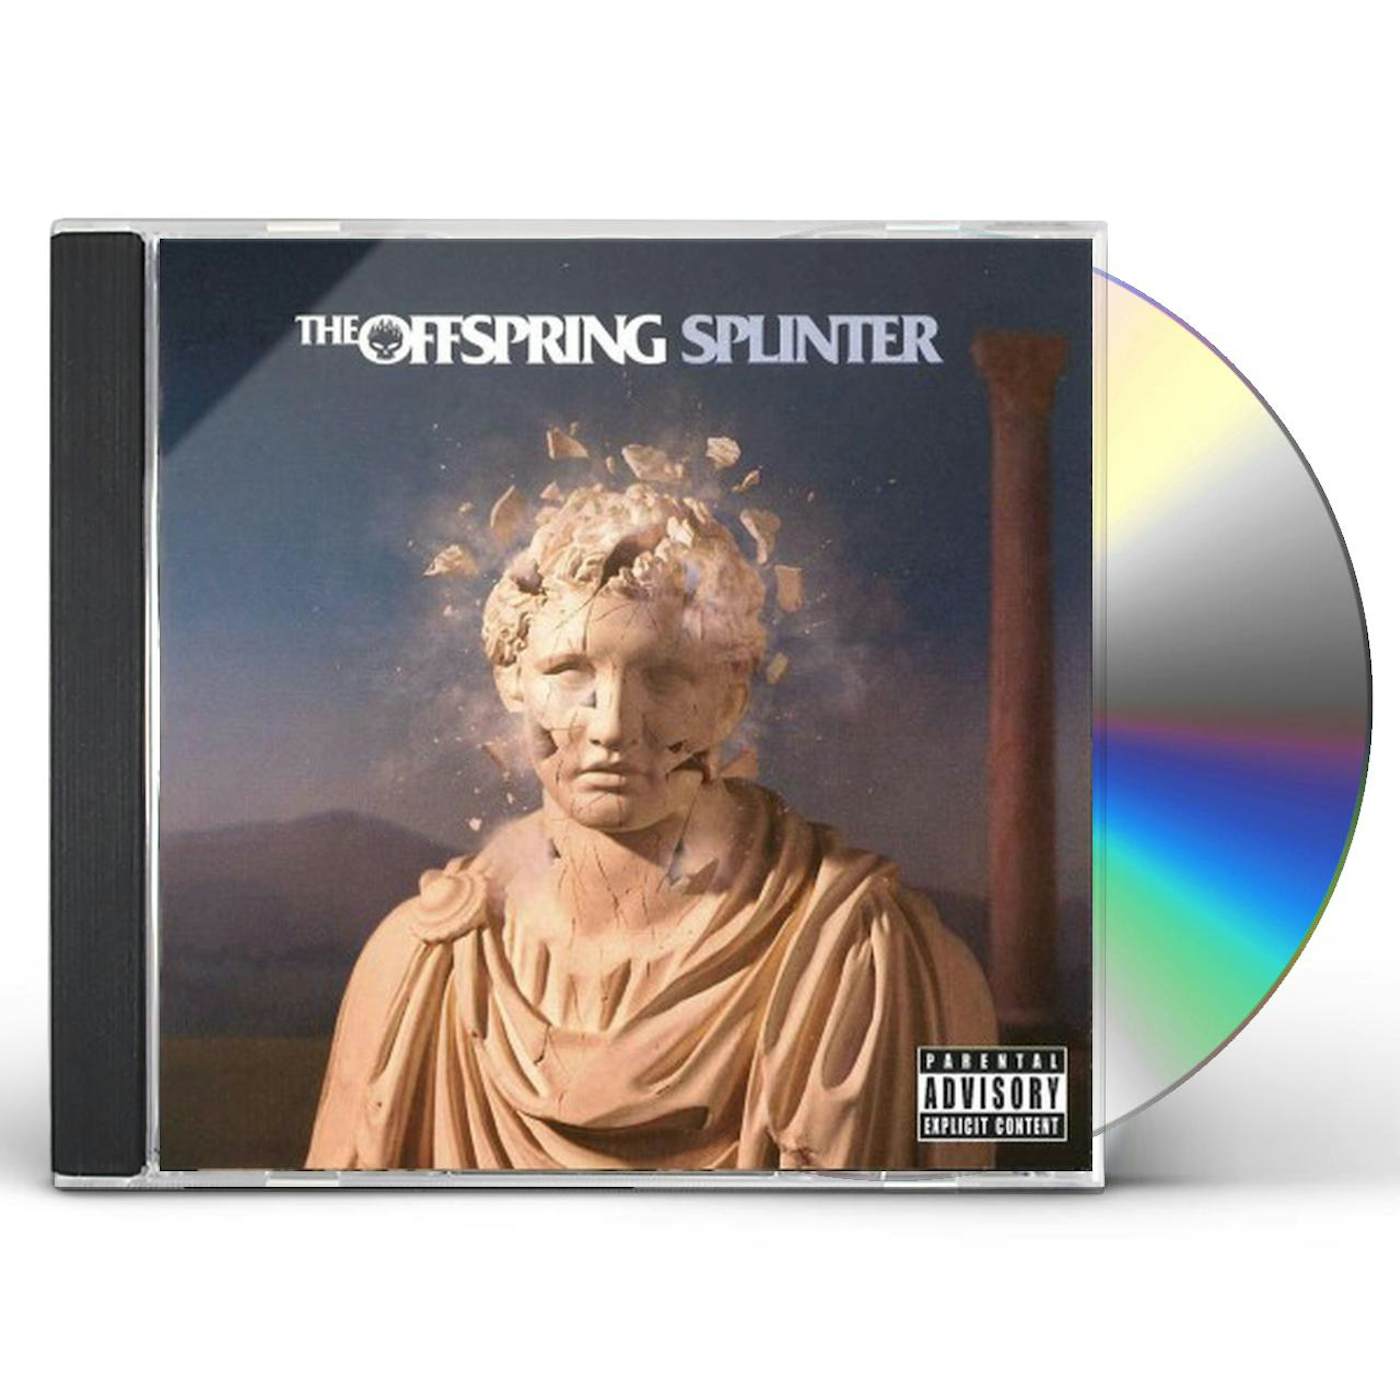 The Offspring SPLINTER CD